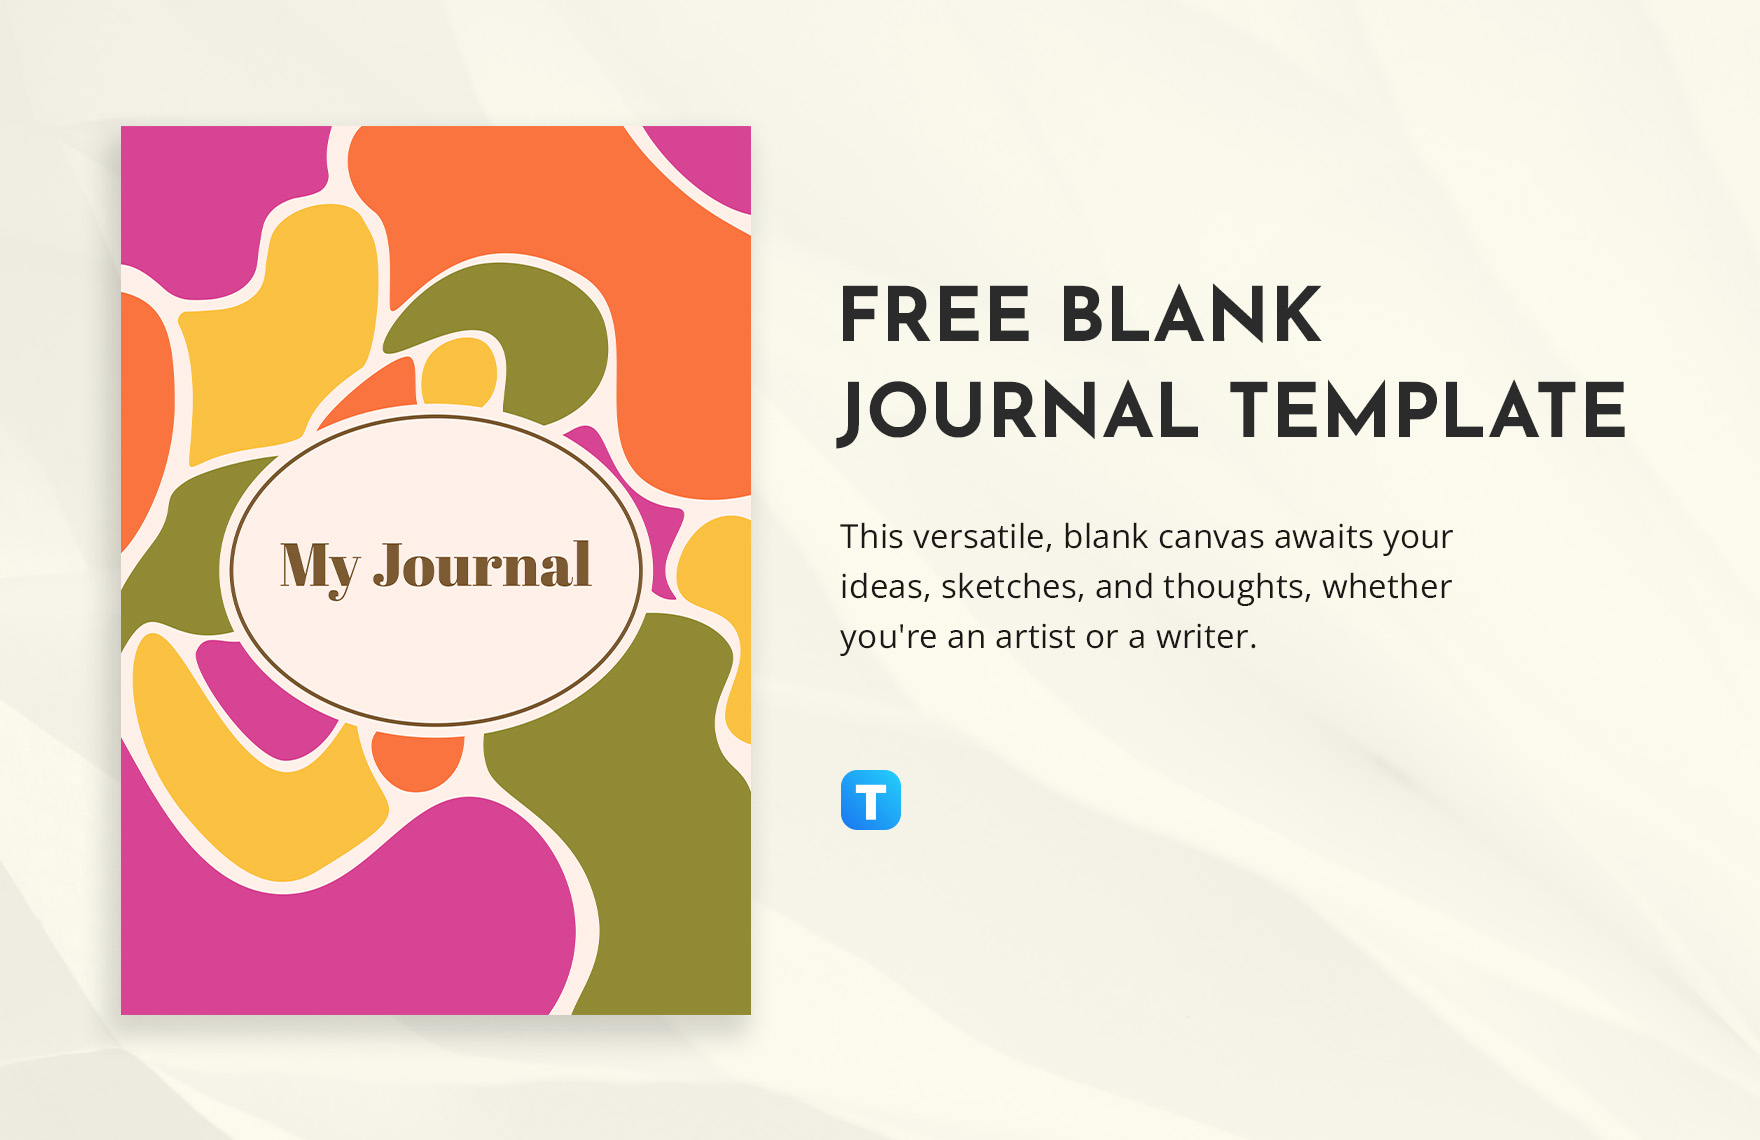 Blank Journal Template